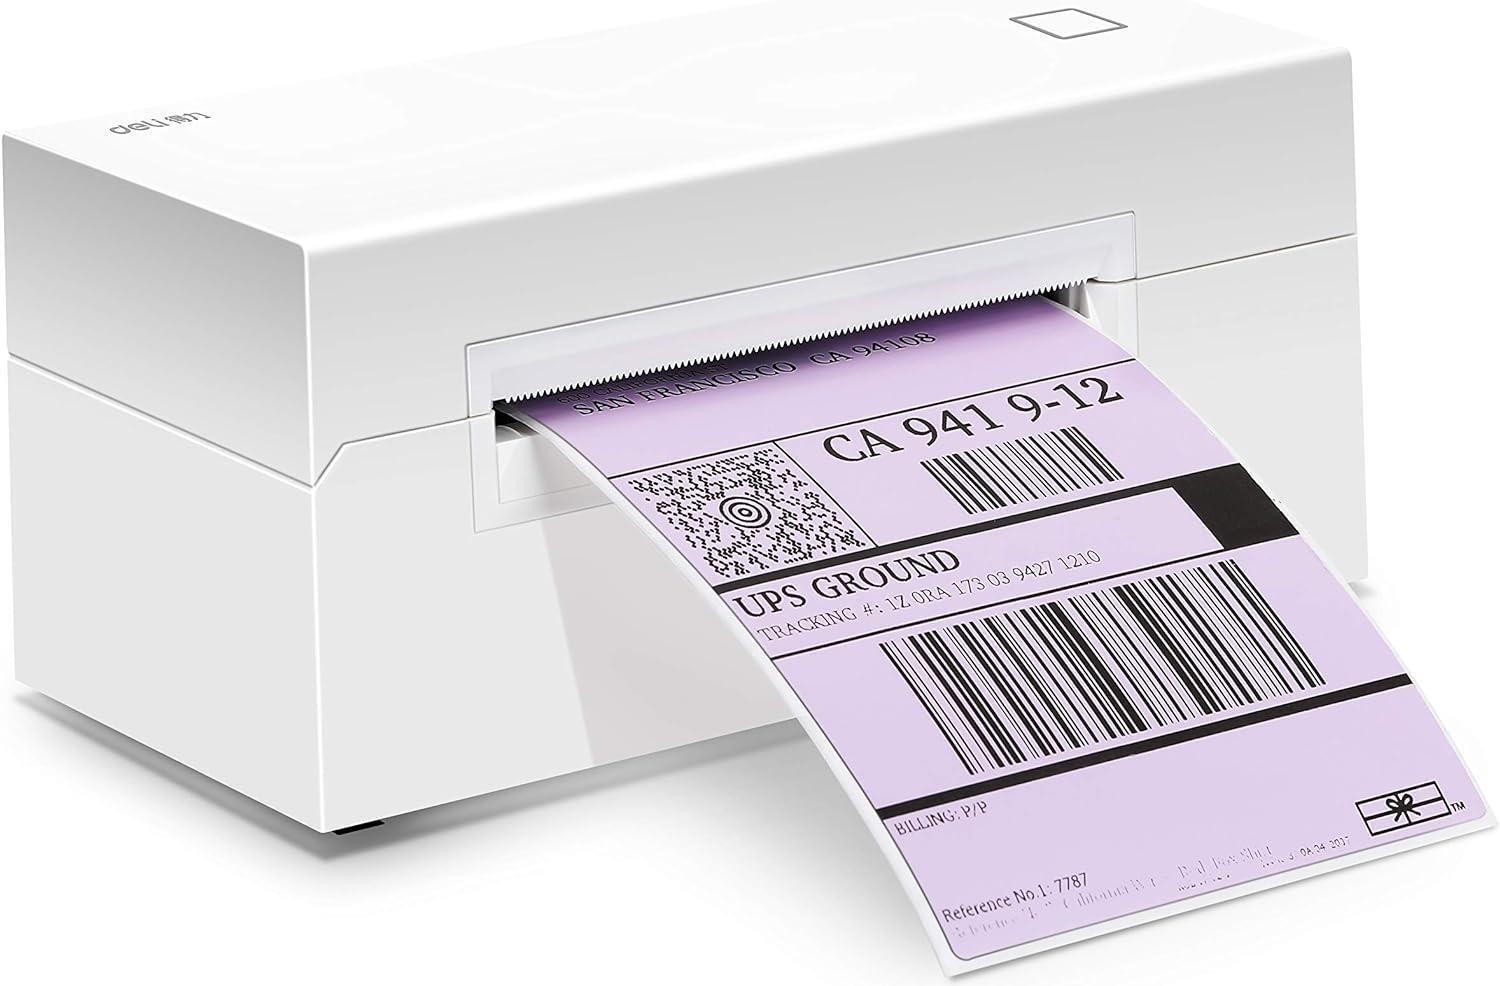 DL-770D 4x6 Thermal Label Printer